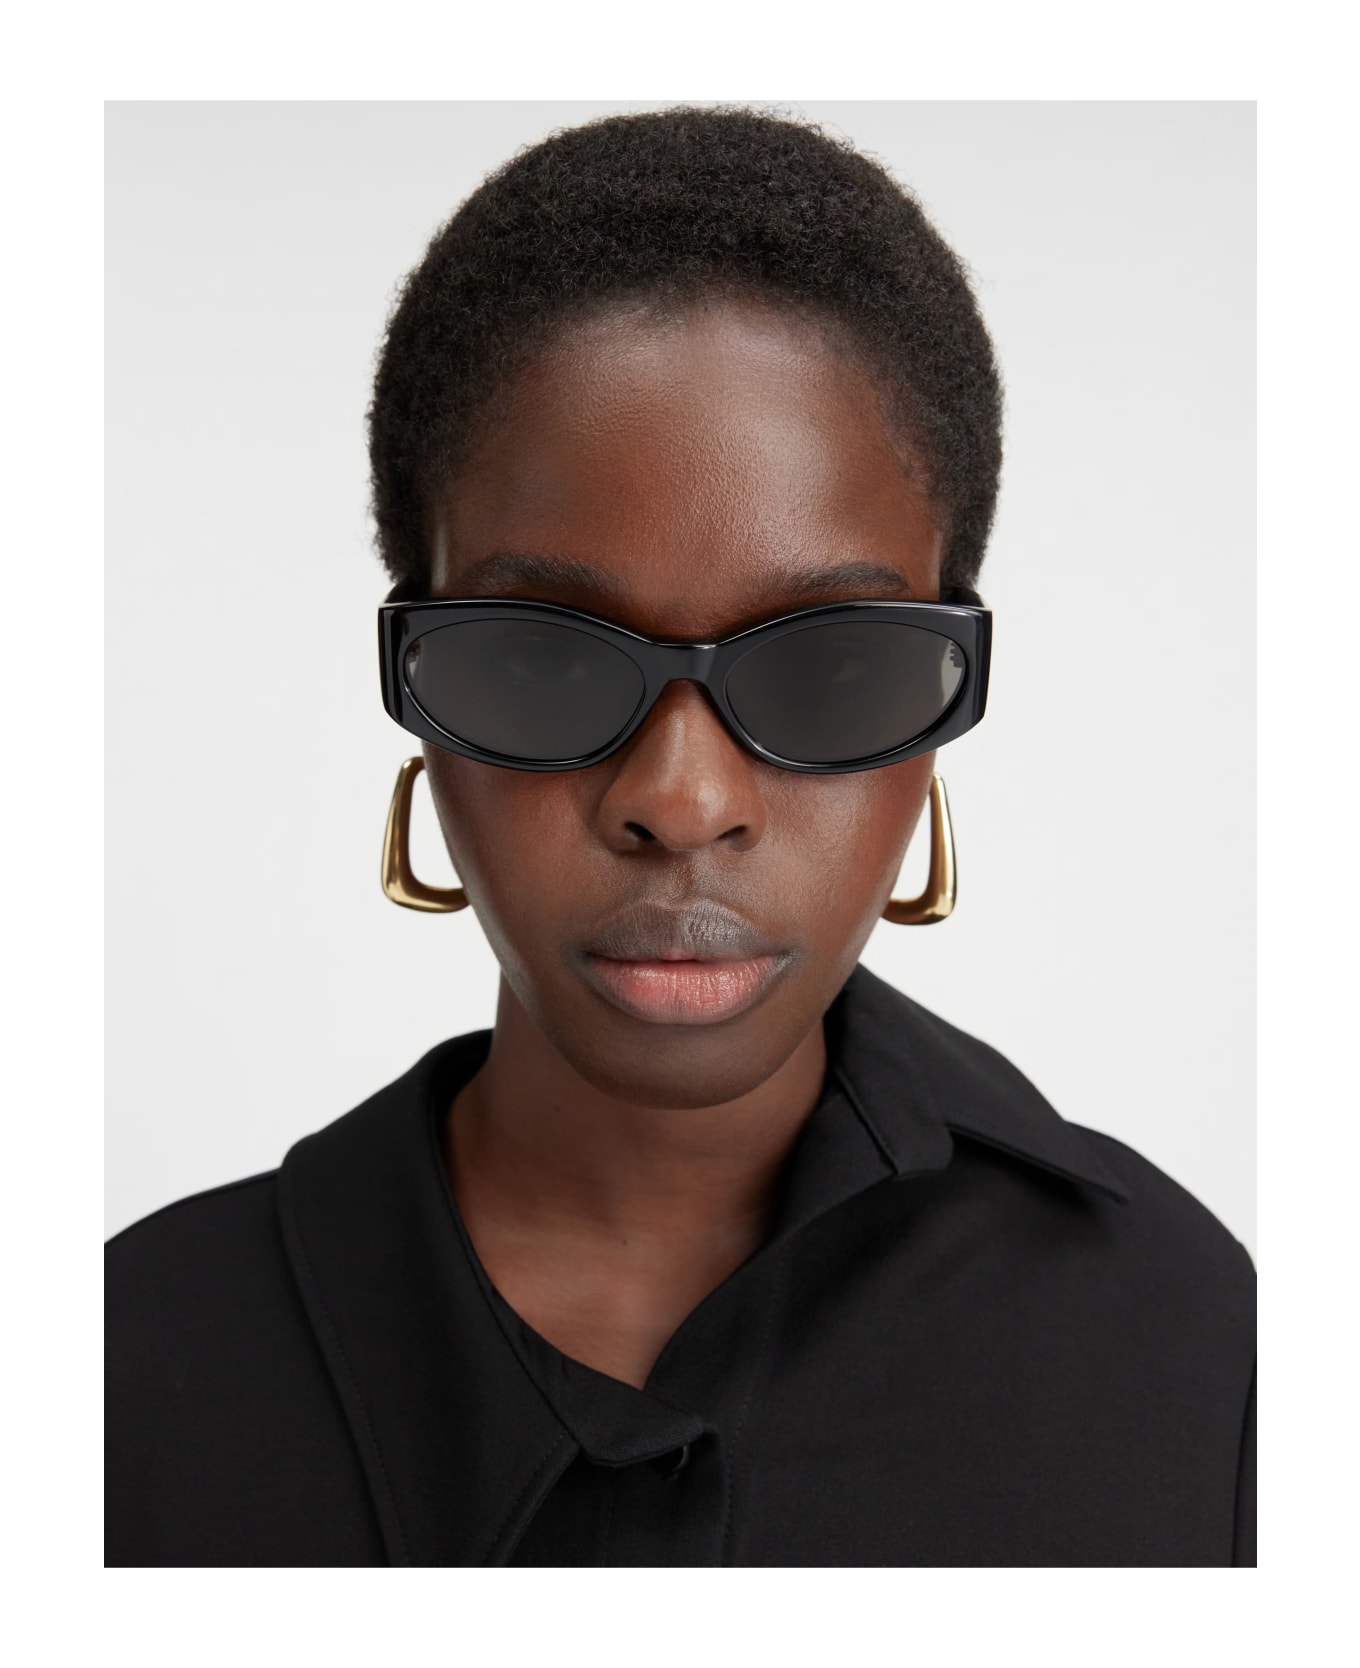 Jacquemus Ovalo - Black Sunglasses - Black